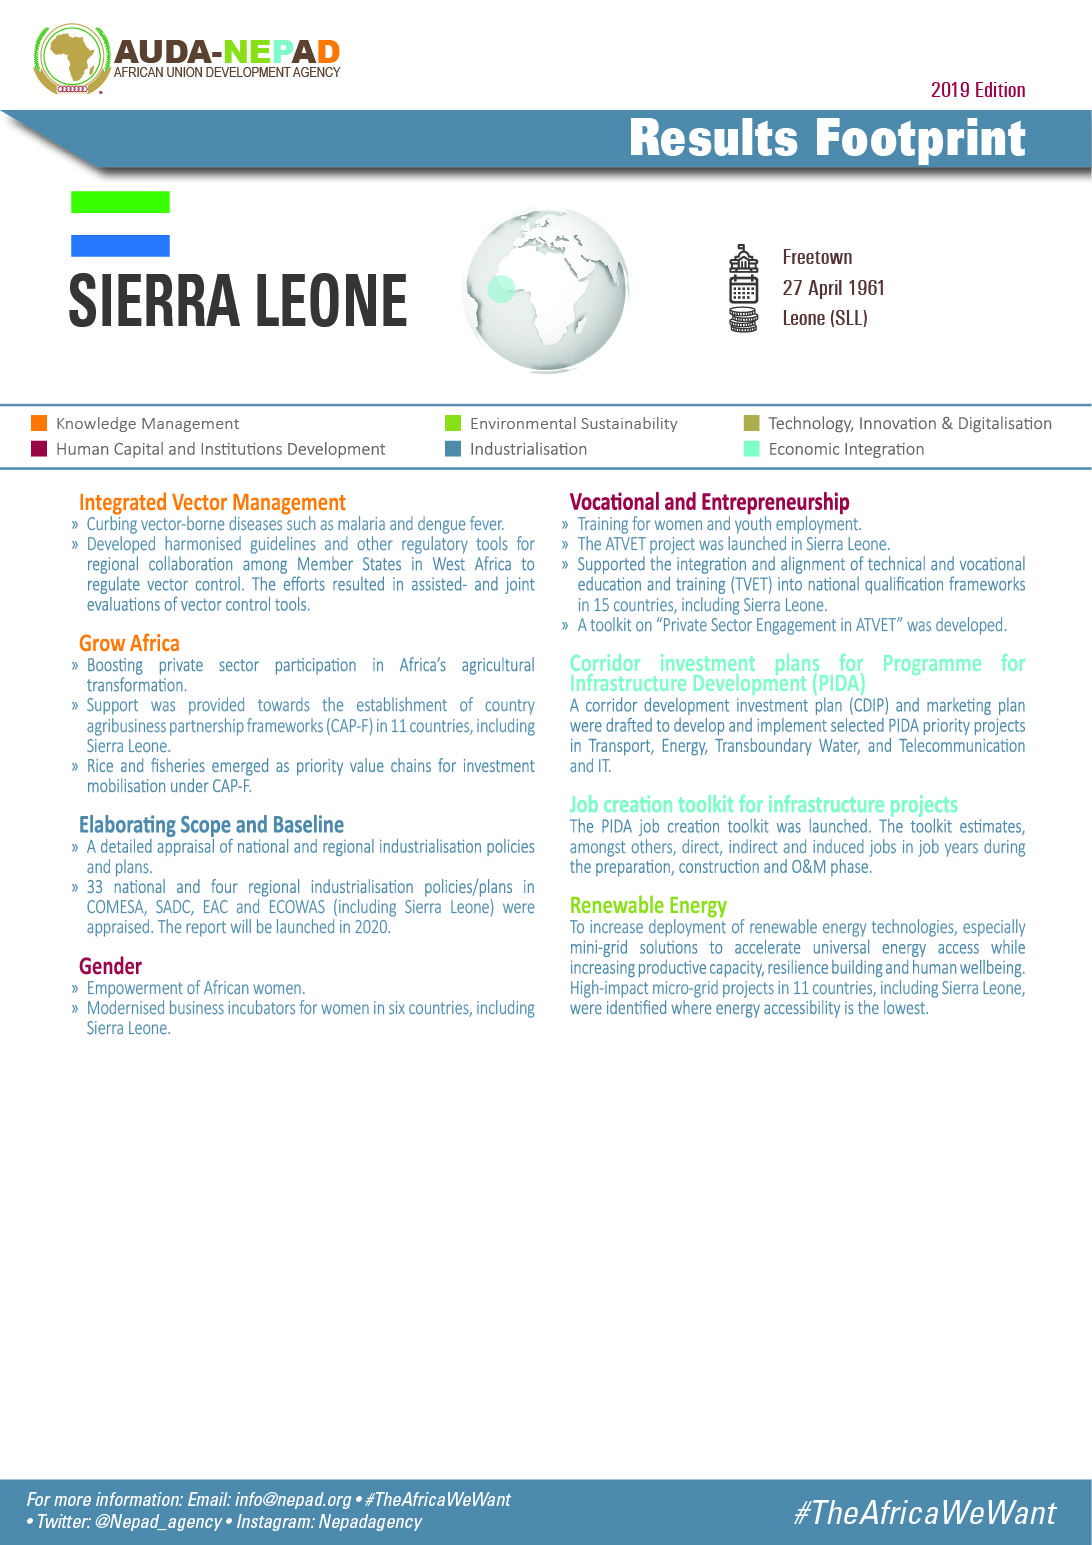 2019 AUDA-NEPAD Footprint: Country Profiles: Sierra Leone